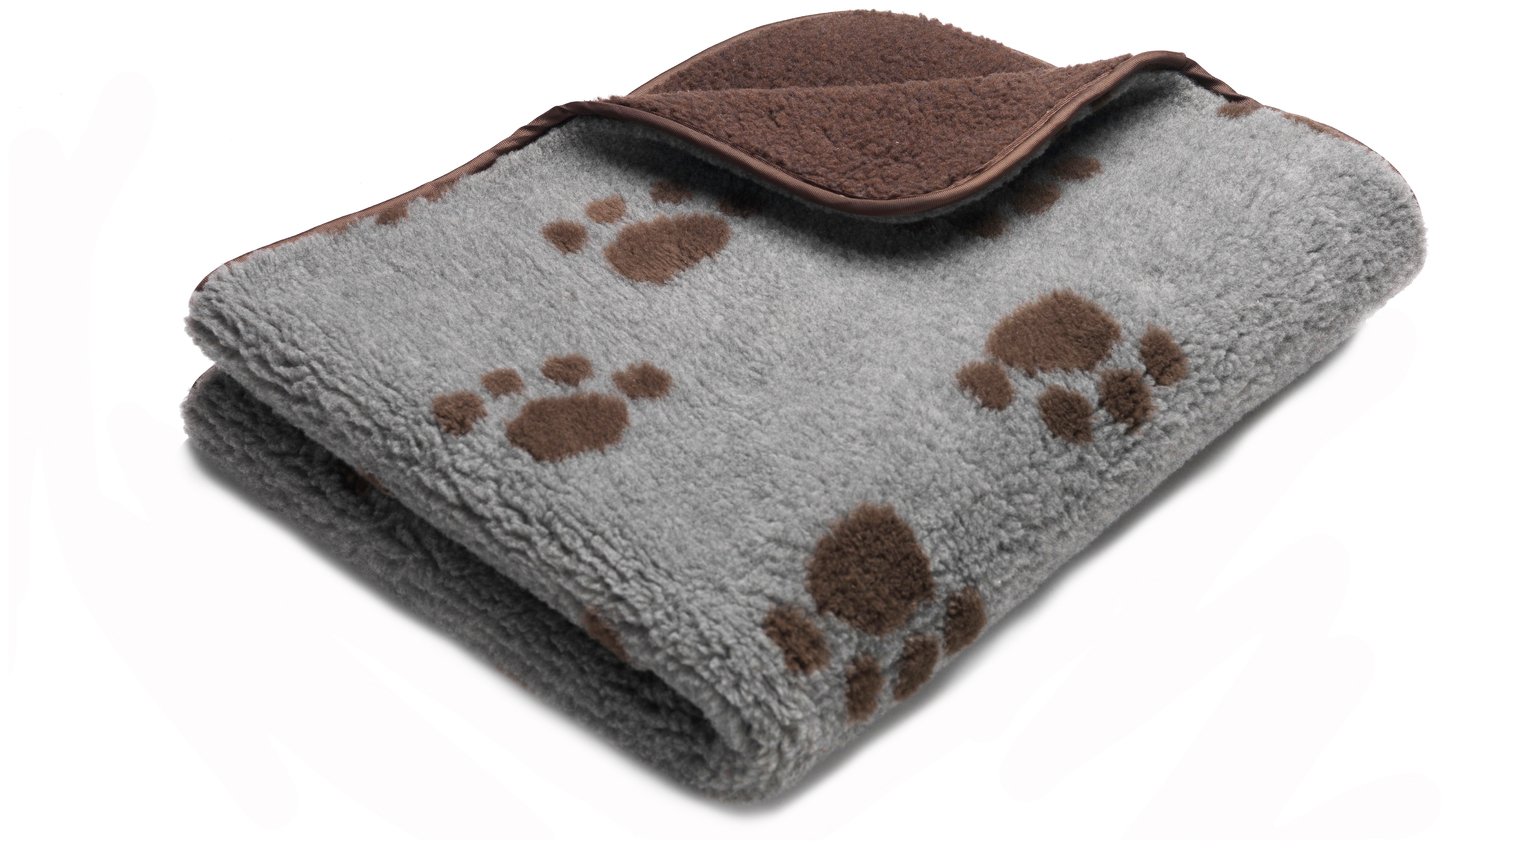 Petface Fleece Sherpa Print Chocolate Pet Comforter Review